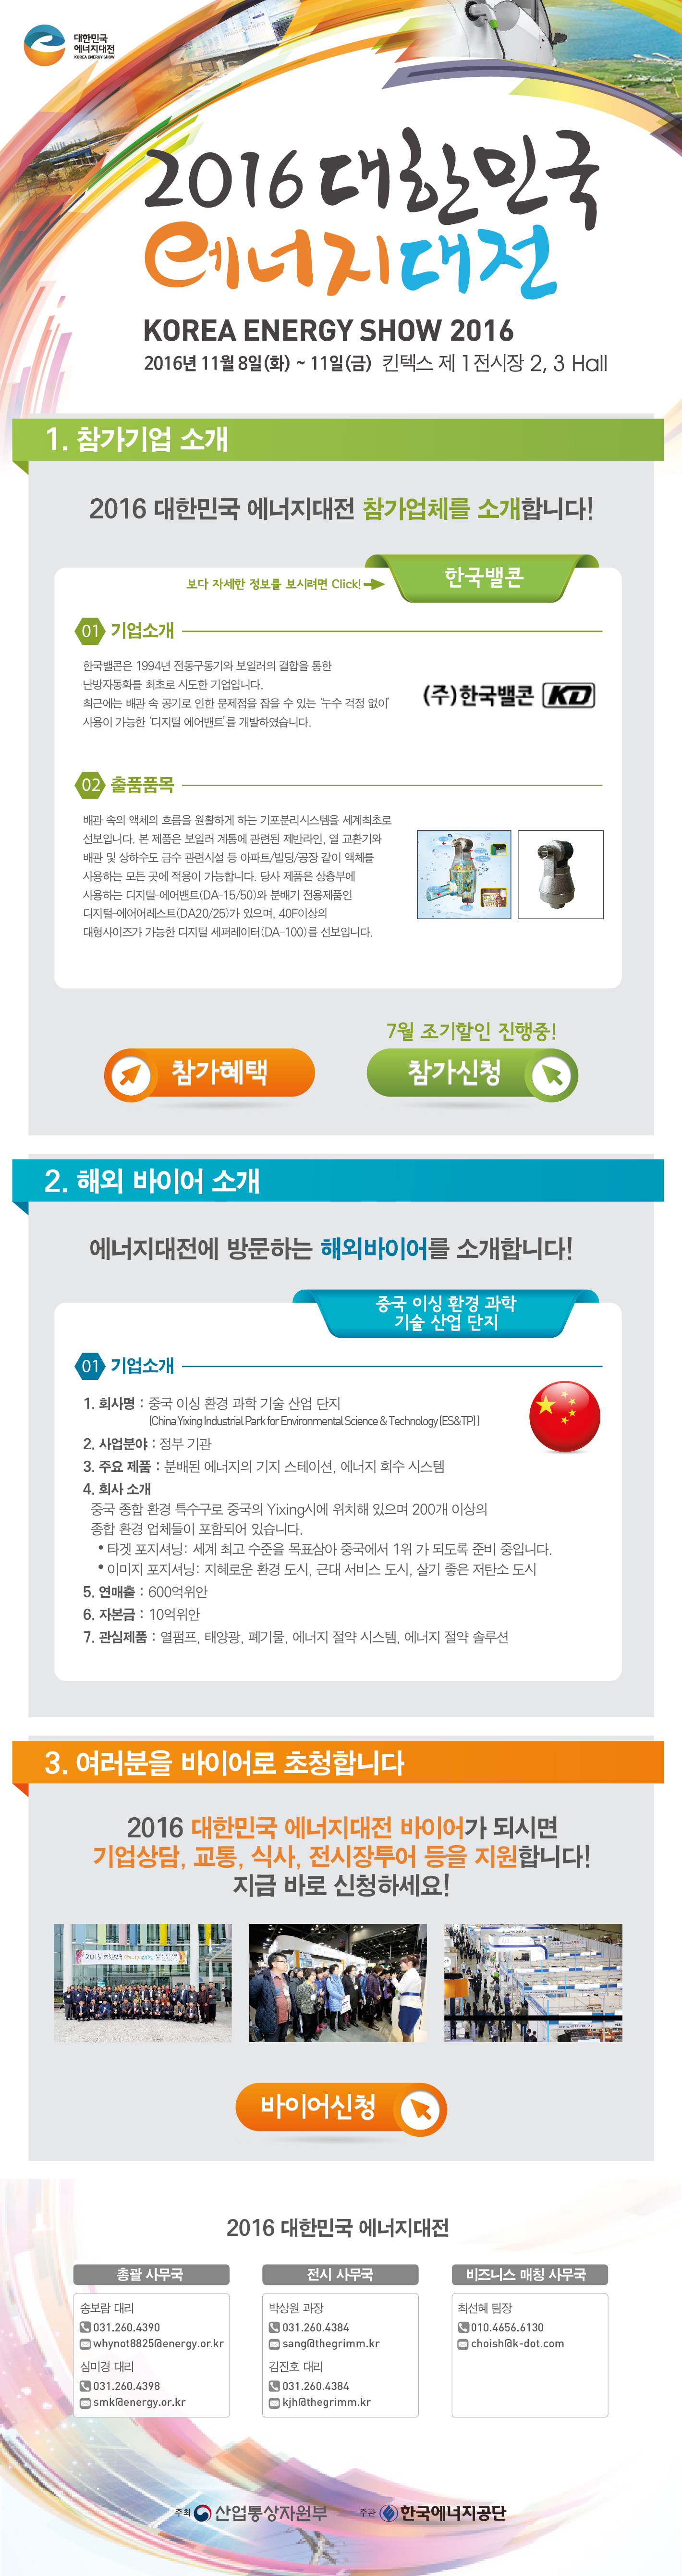 [Newsletter Vol.5] 대한민국 에너지대전 참가업체 소개 - 한국밸콘